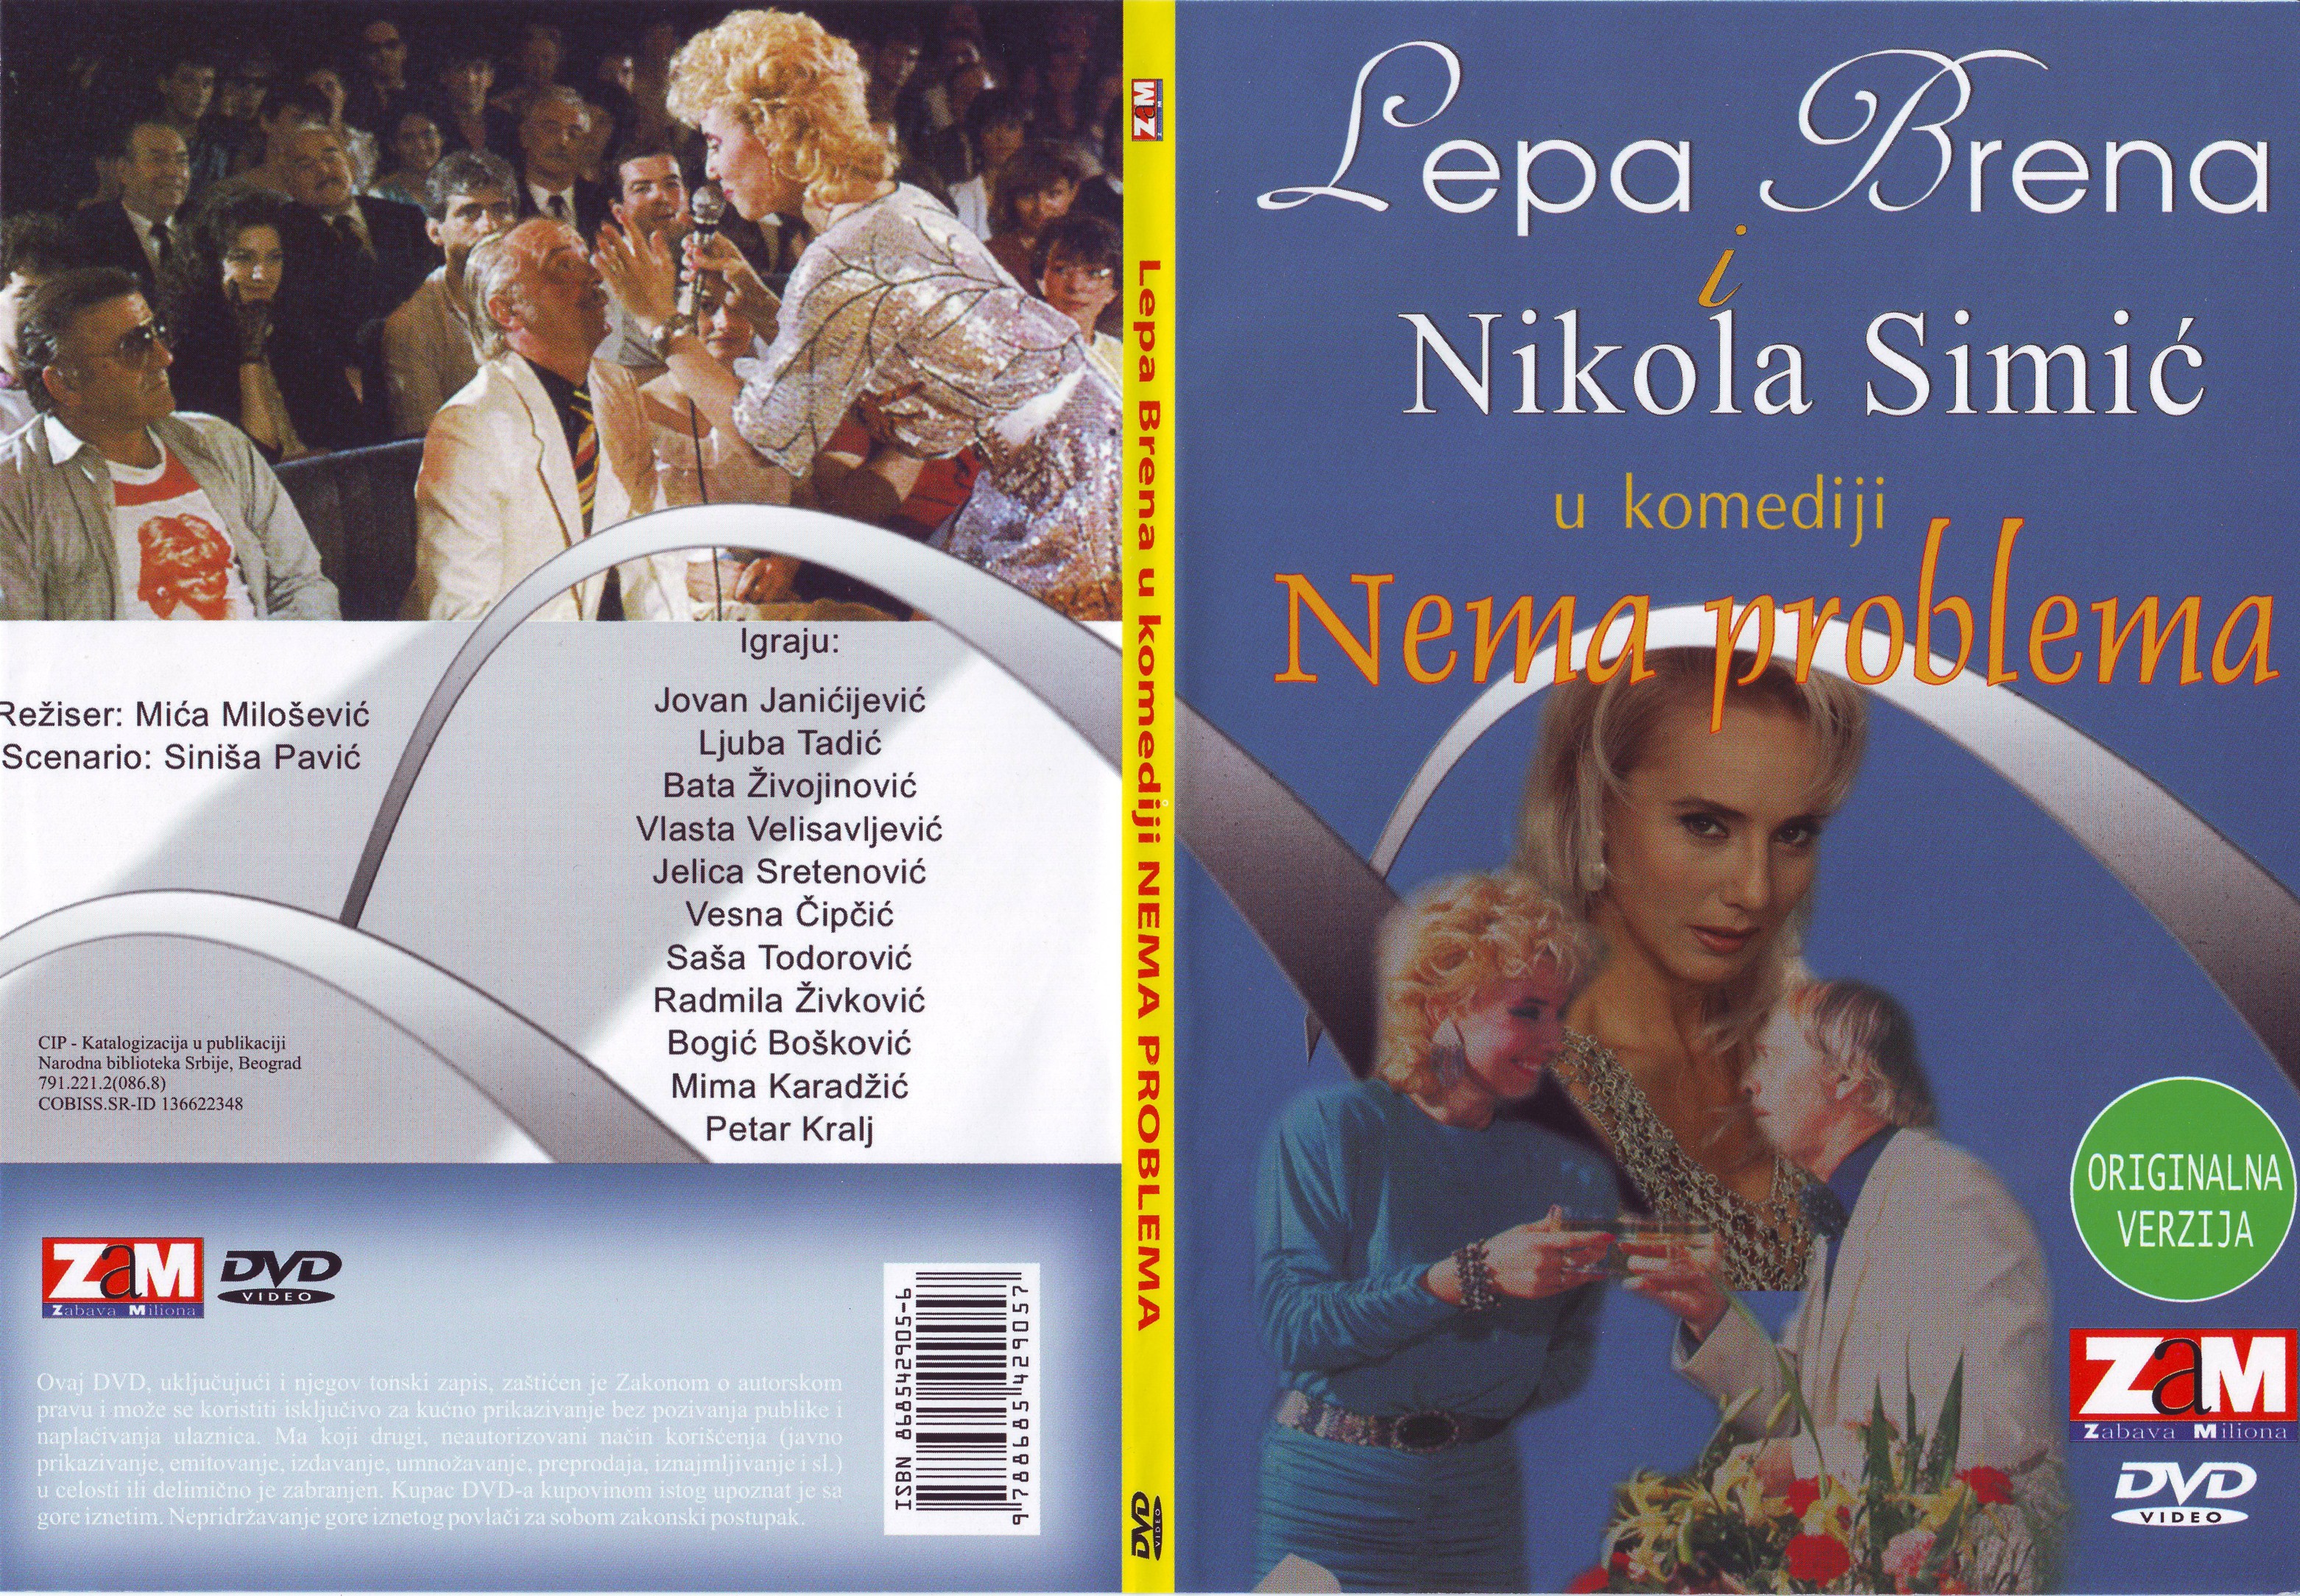 Click to view full size image -  DVD Cover - N - DVD - NEMA PROBLEMA  - DVD - NEMA PROBLEMA .jpg